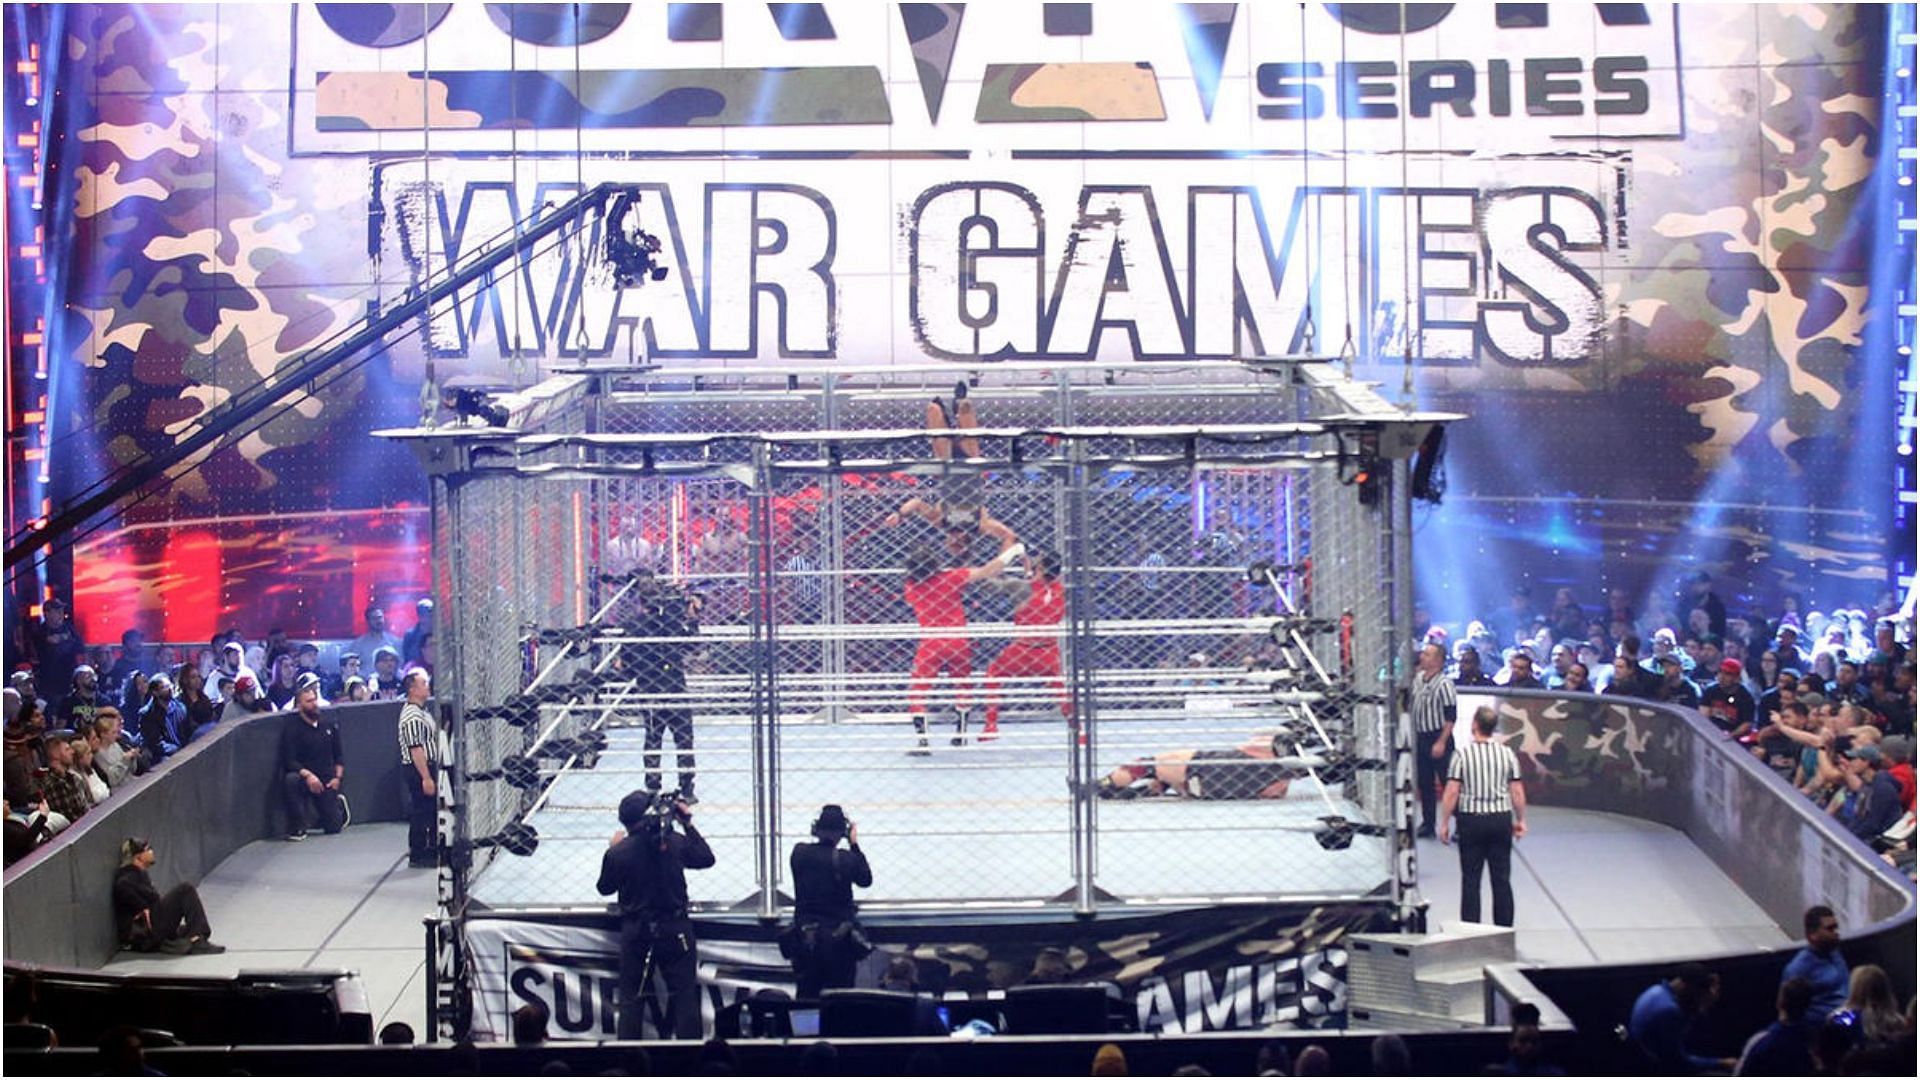 WarGames was a smashing success at Survivor Series 2022